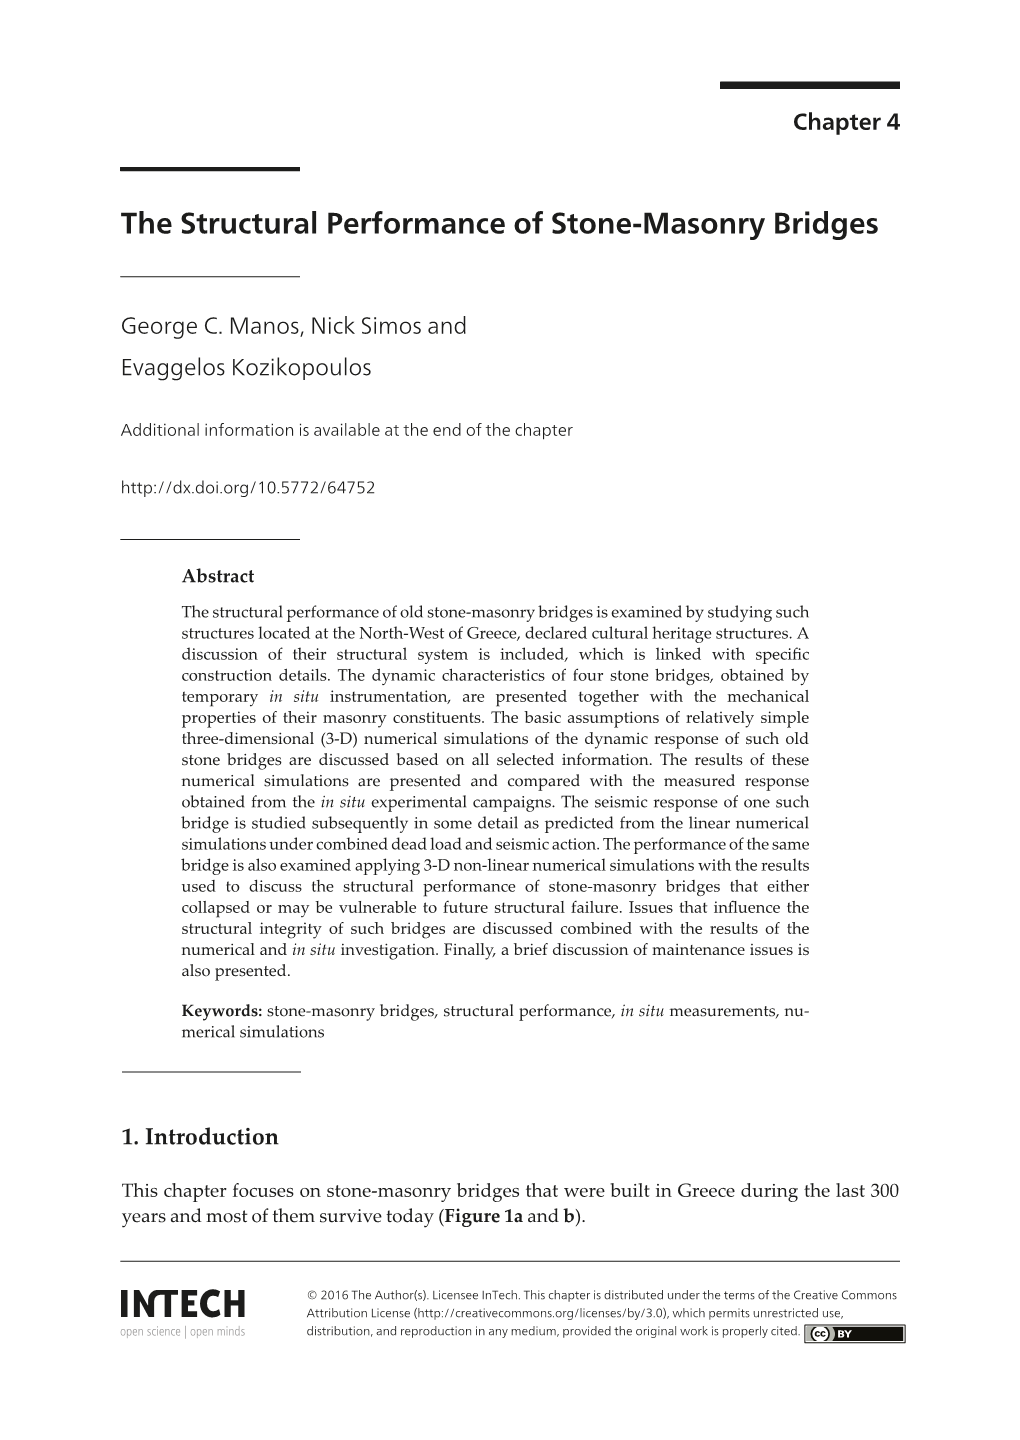 The Structural Performance of Stone-Masonry Bridges the Structural Performance of Stone-Masonry Bridges